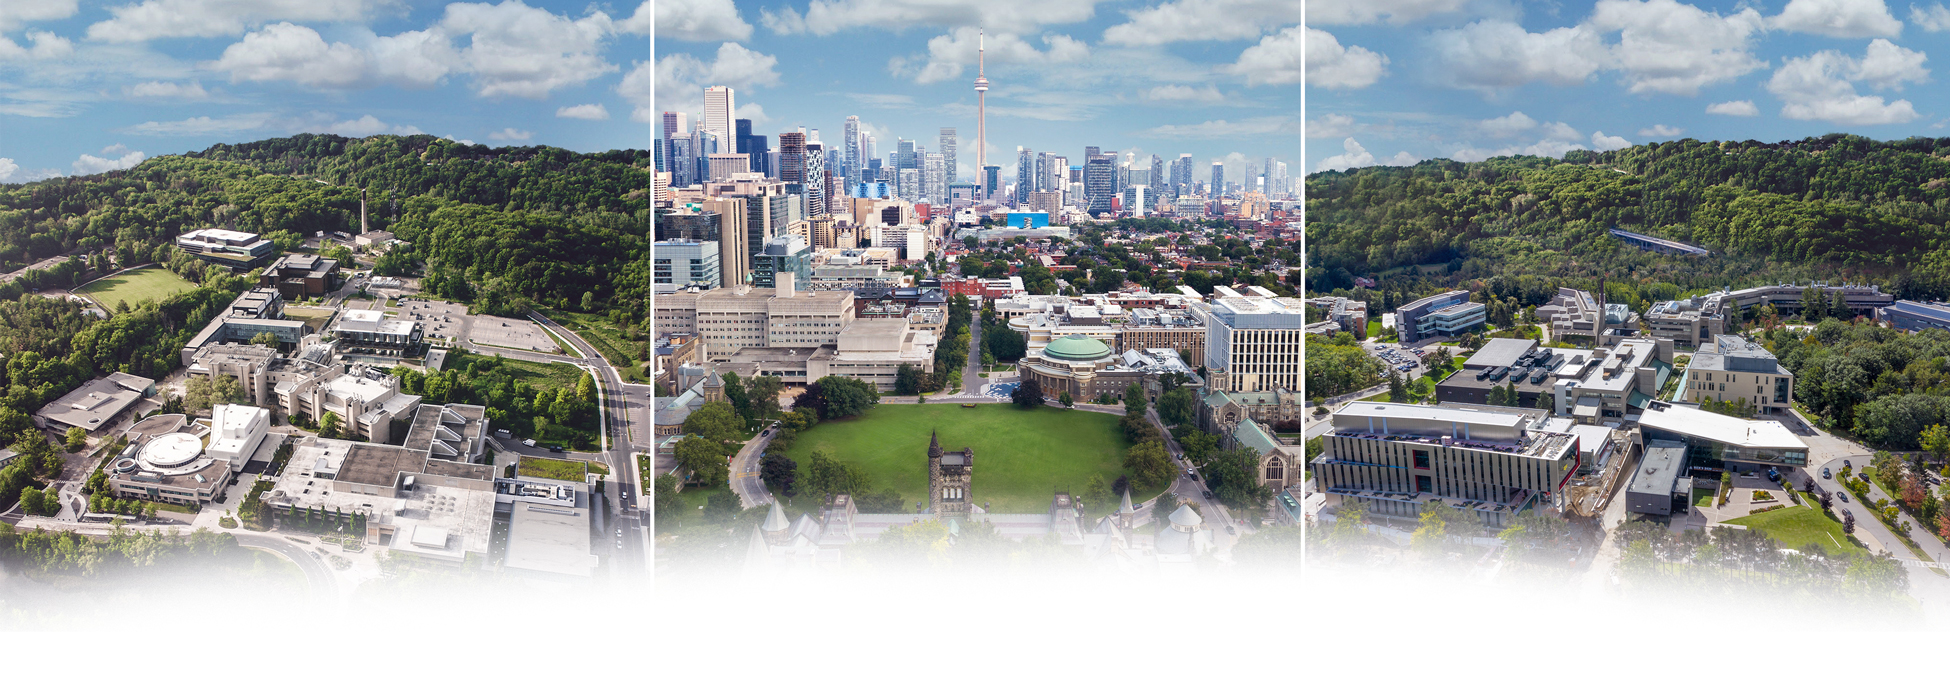 University of Toronto | World University Rankings | THE